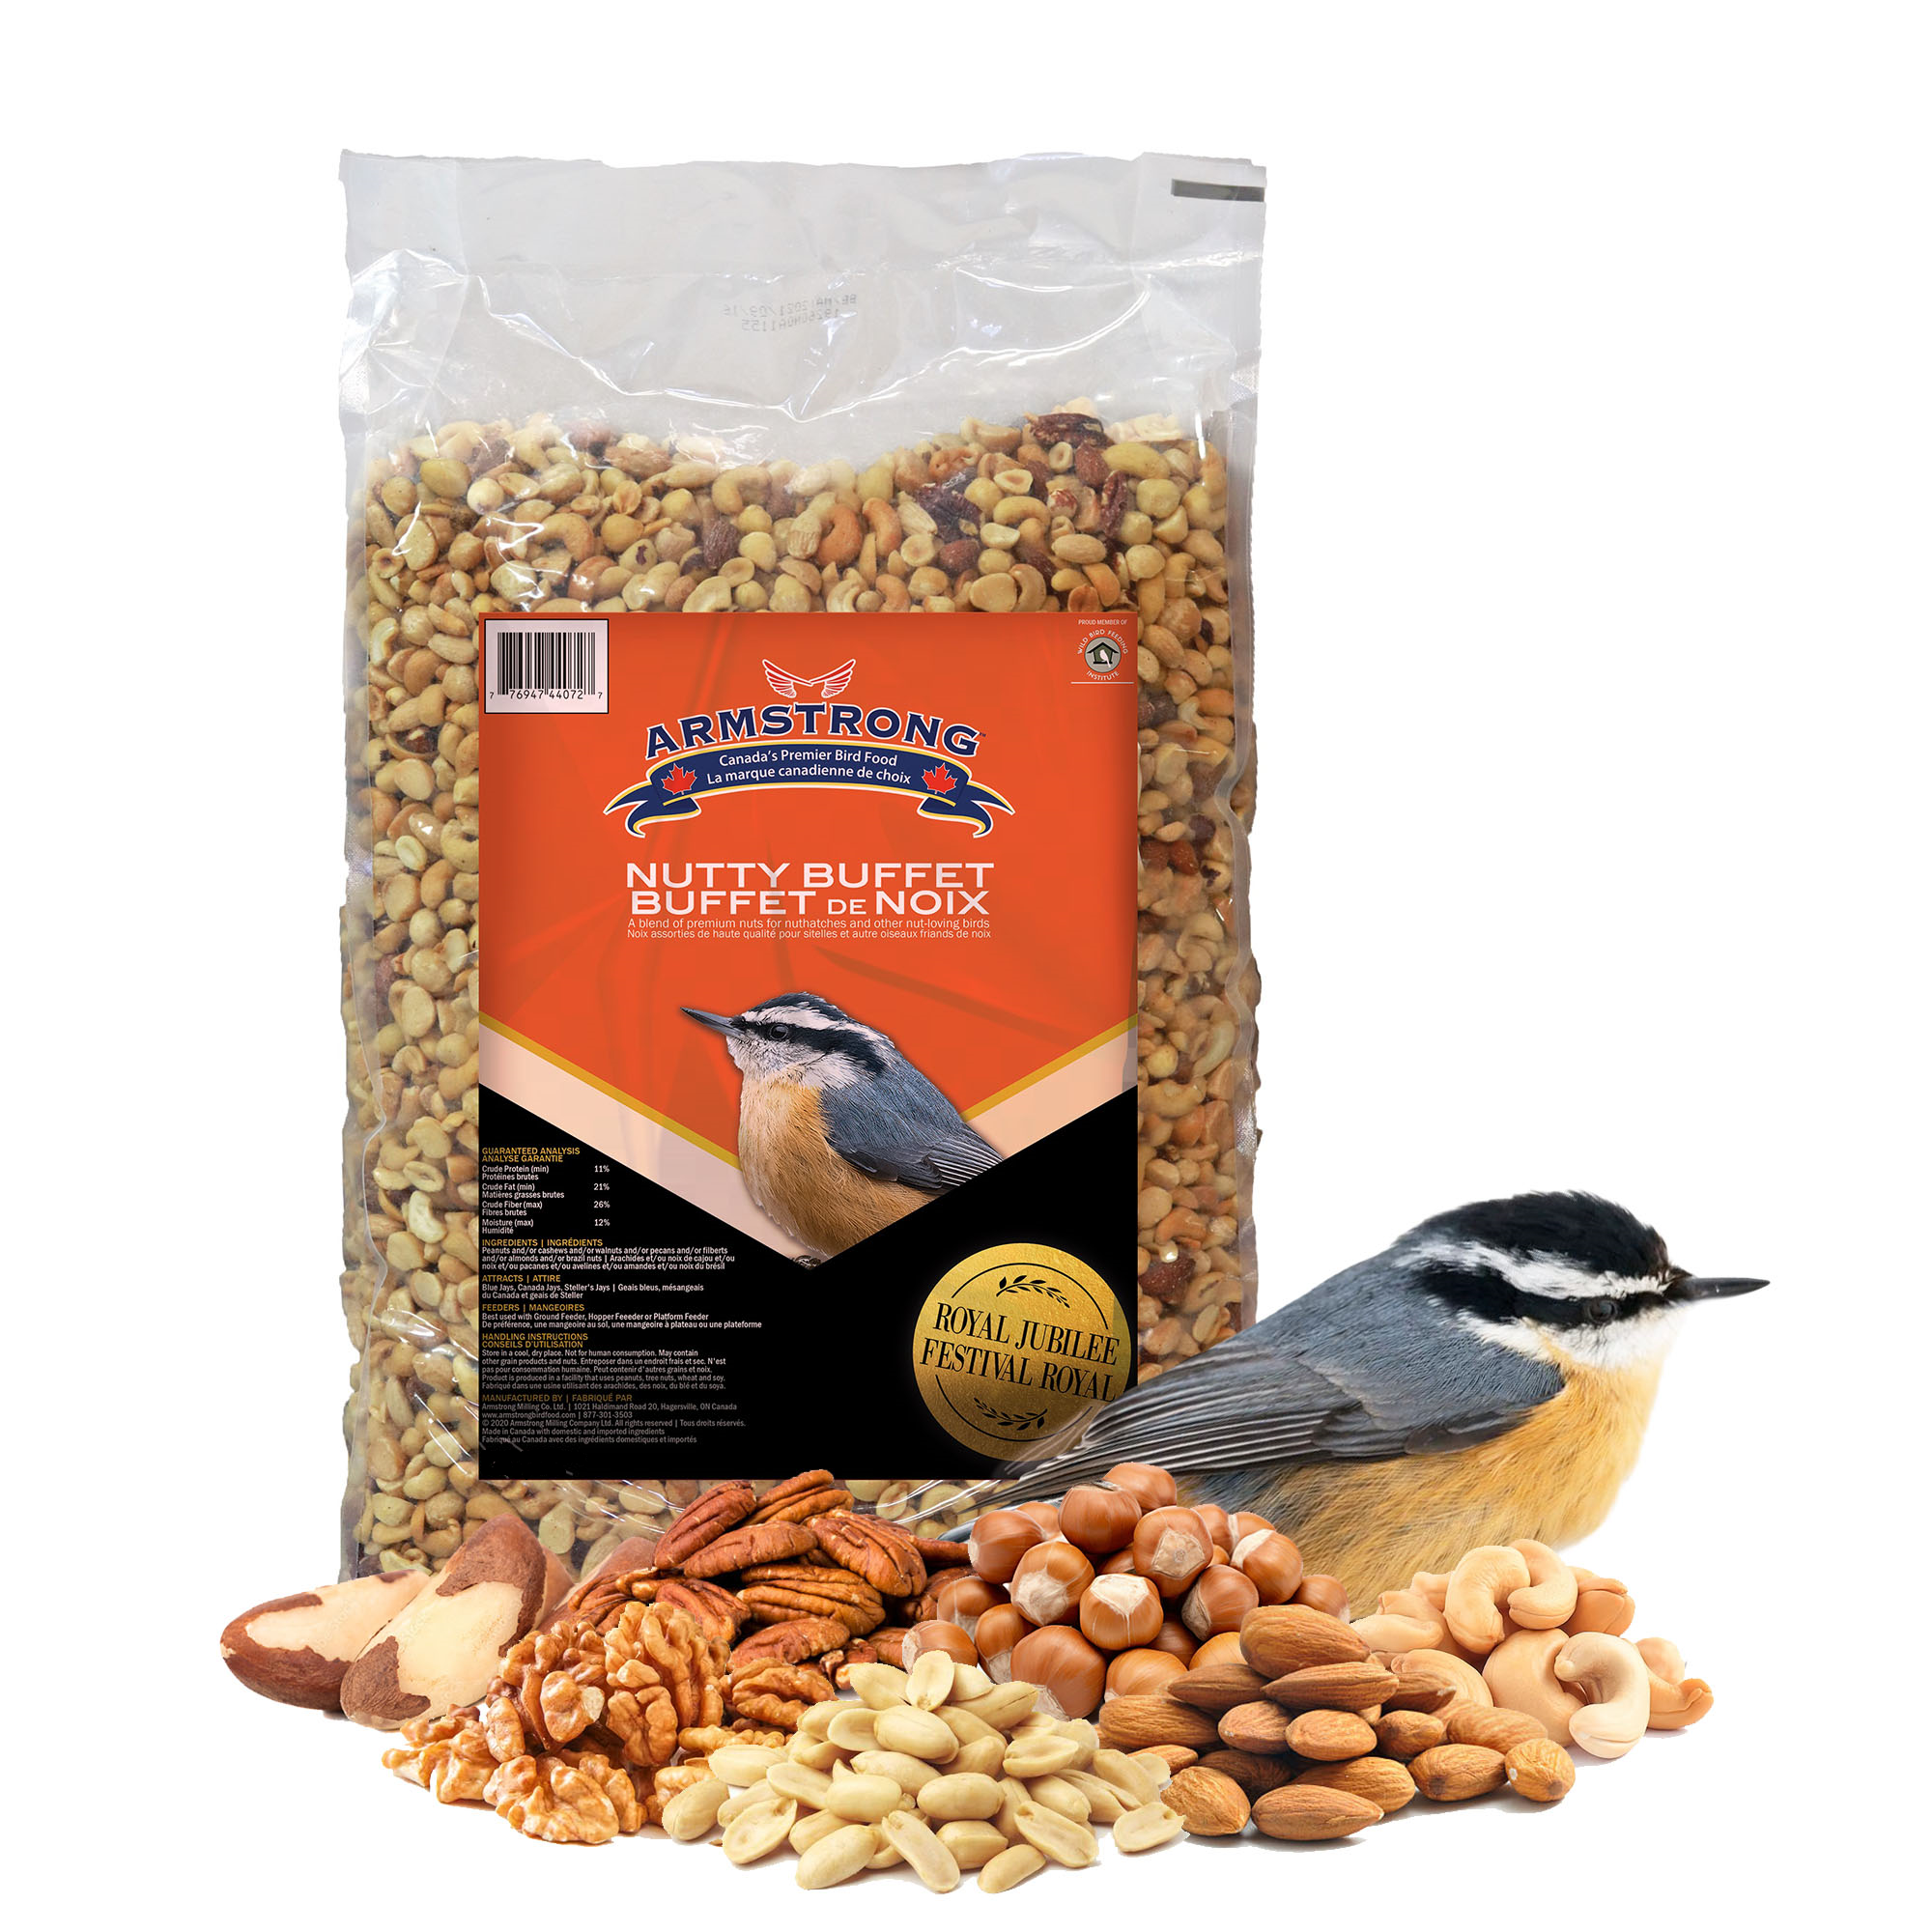 Armstrong Wild Bird Food Royal Jubilee Nutty Buffet Bird Seed